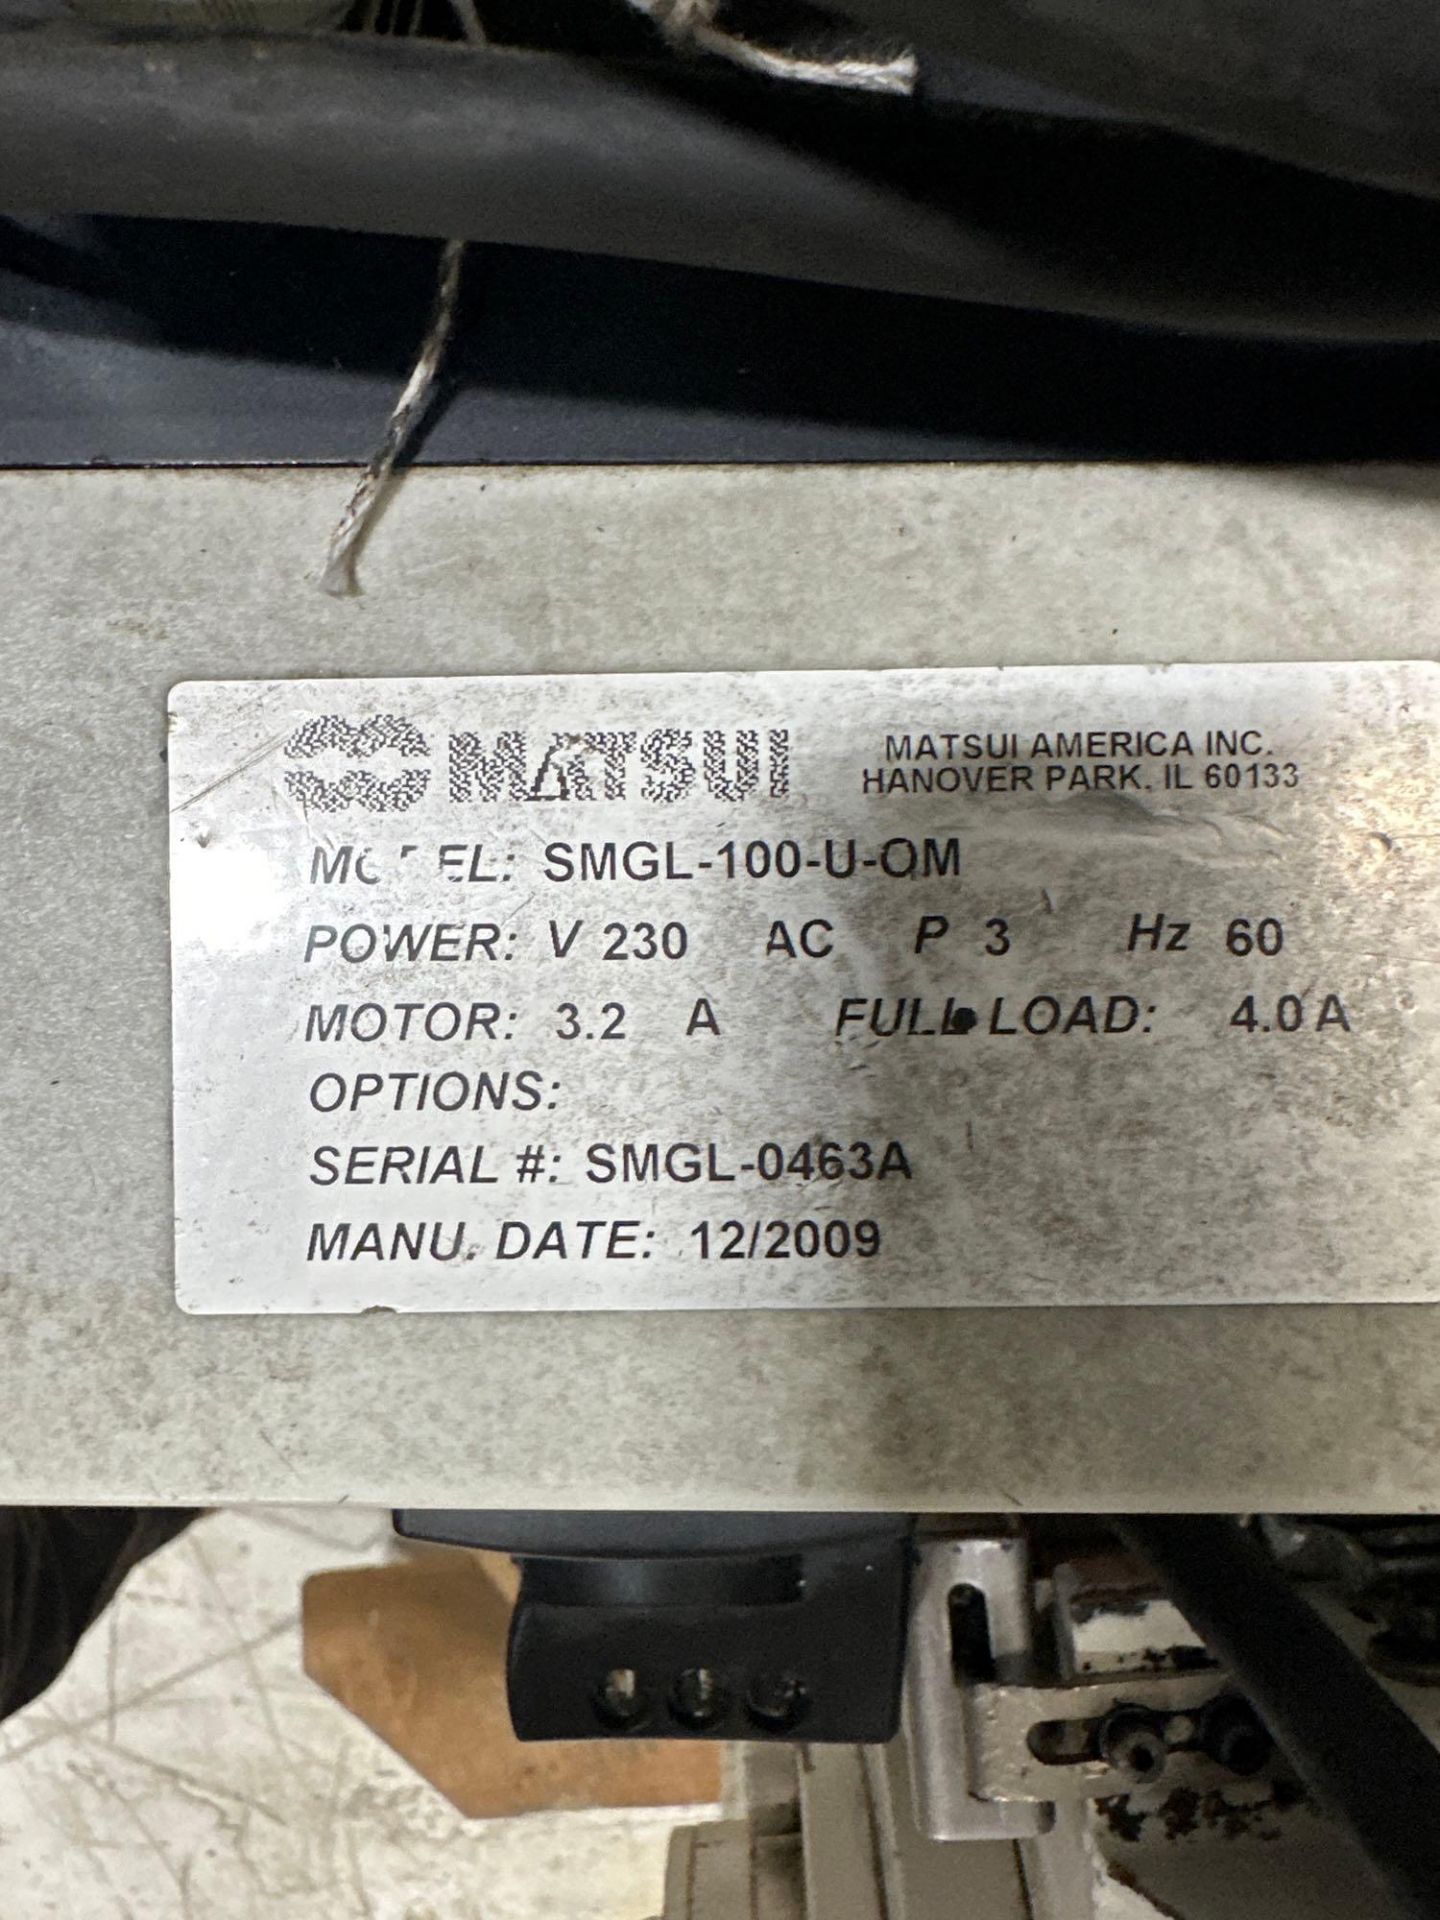 Matsui SMGL-100-U-OM Granulator, 230V, Feed throat size:Ê 8" x 10" - Image 5 of 5